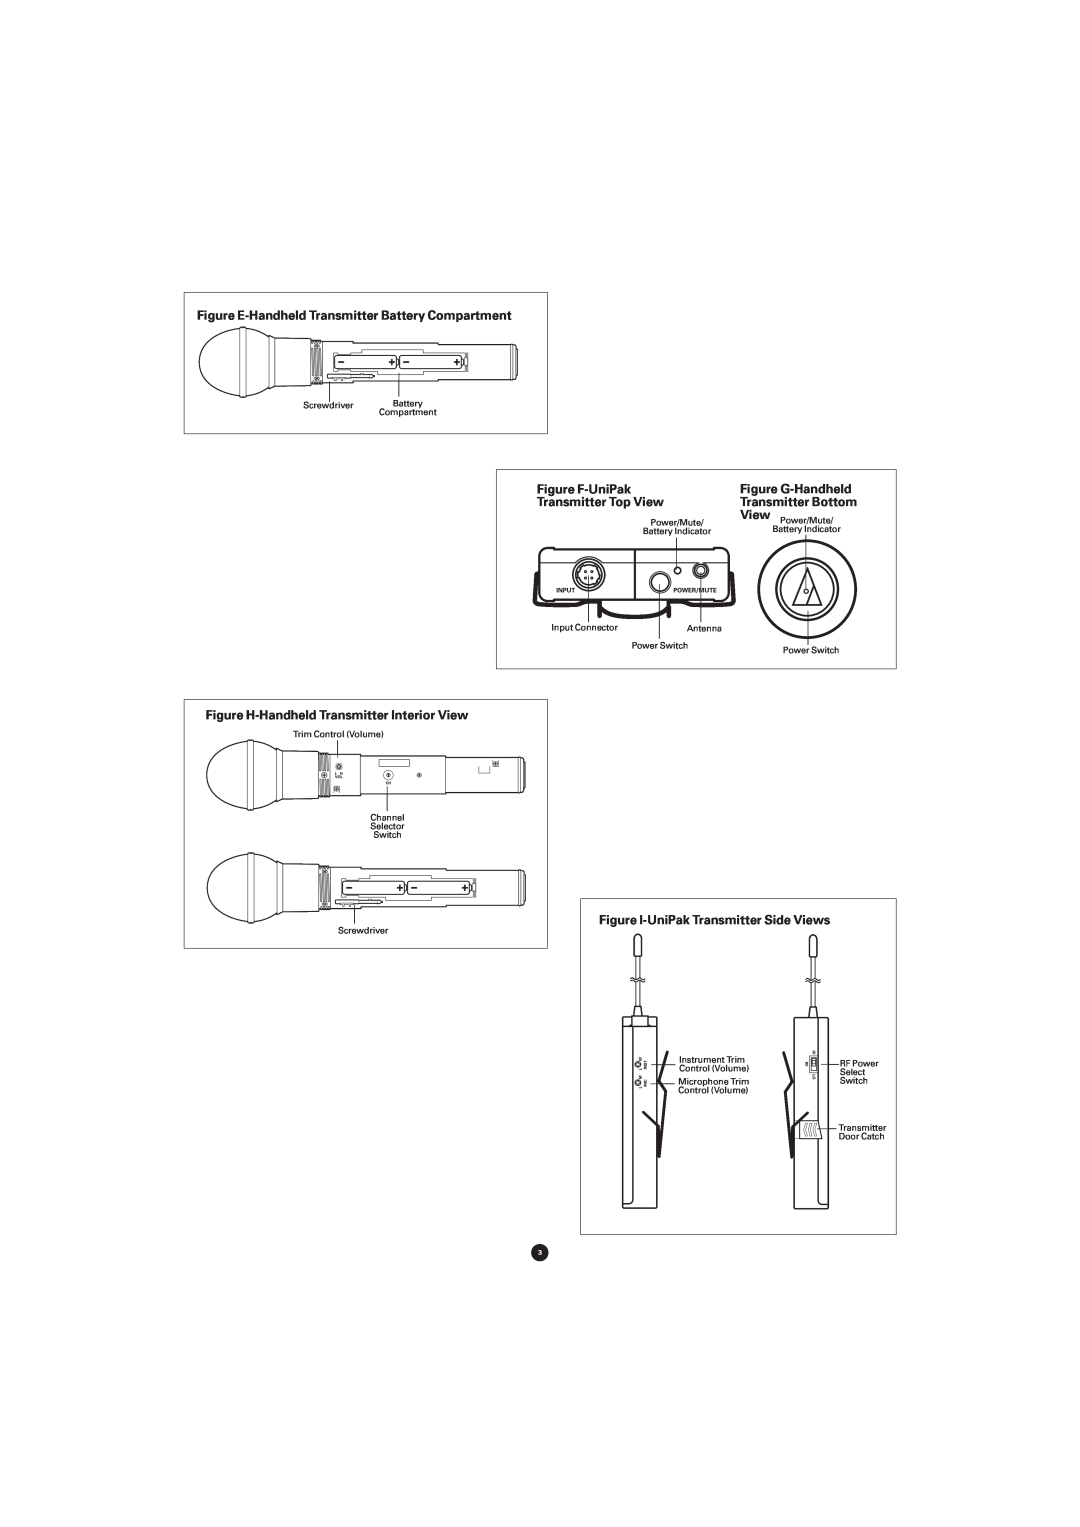 Audio-Technica ATW-701G, ATW-702 Figure E-Handheld Transmitter Battery Compartment, Figure F-UniPak, Figure G-Handheld 